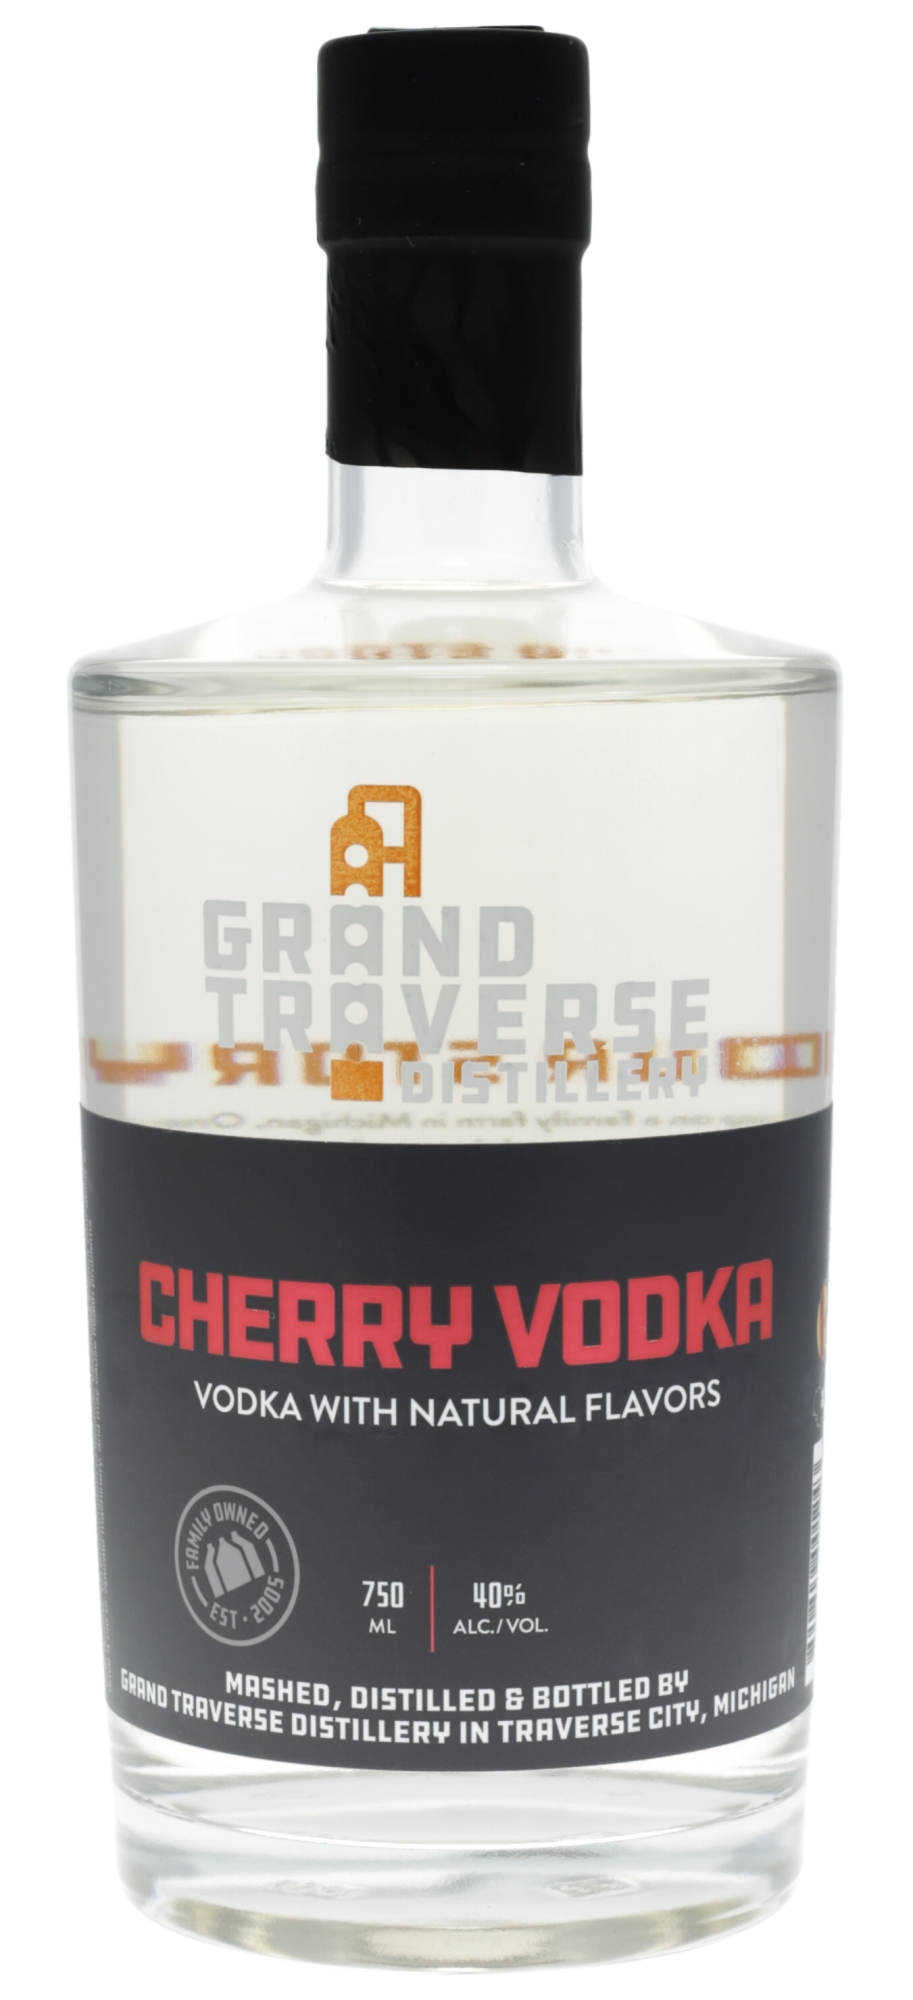 Grand Traverse Cherry Vodka